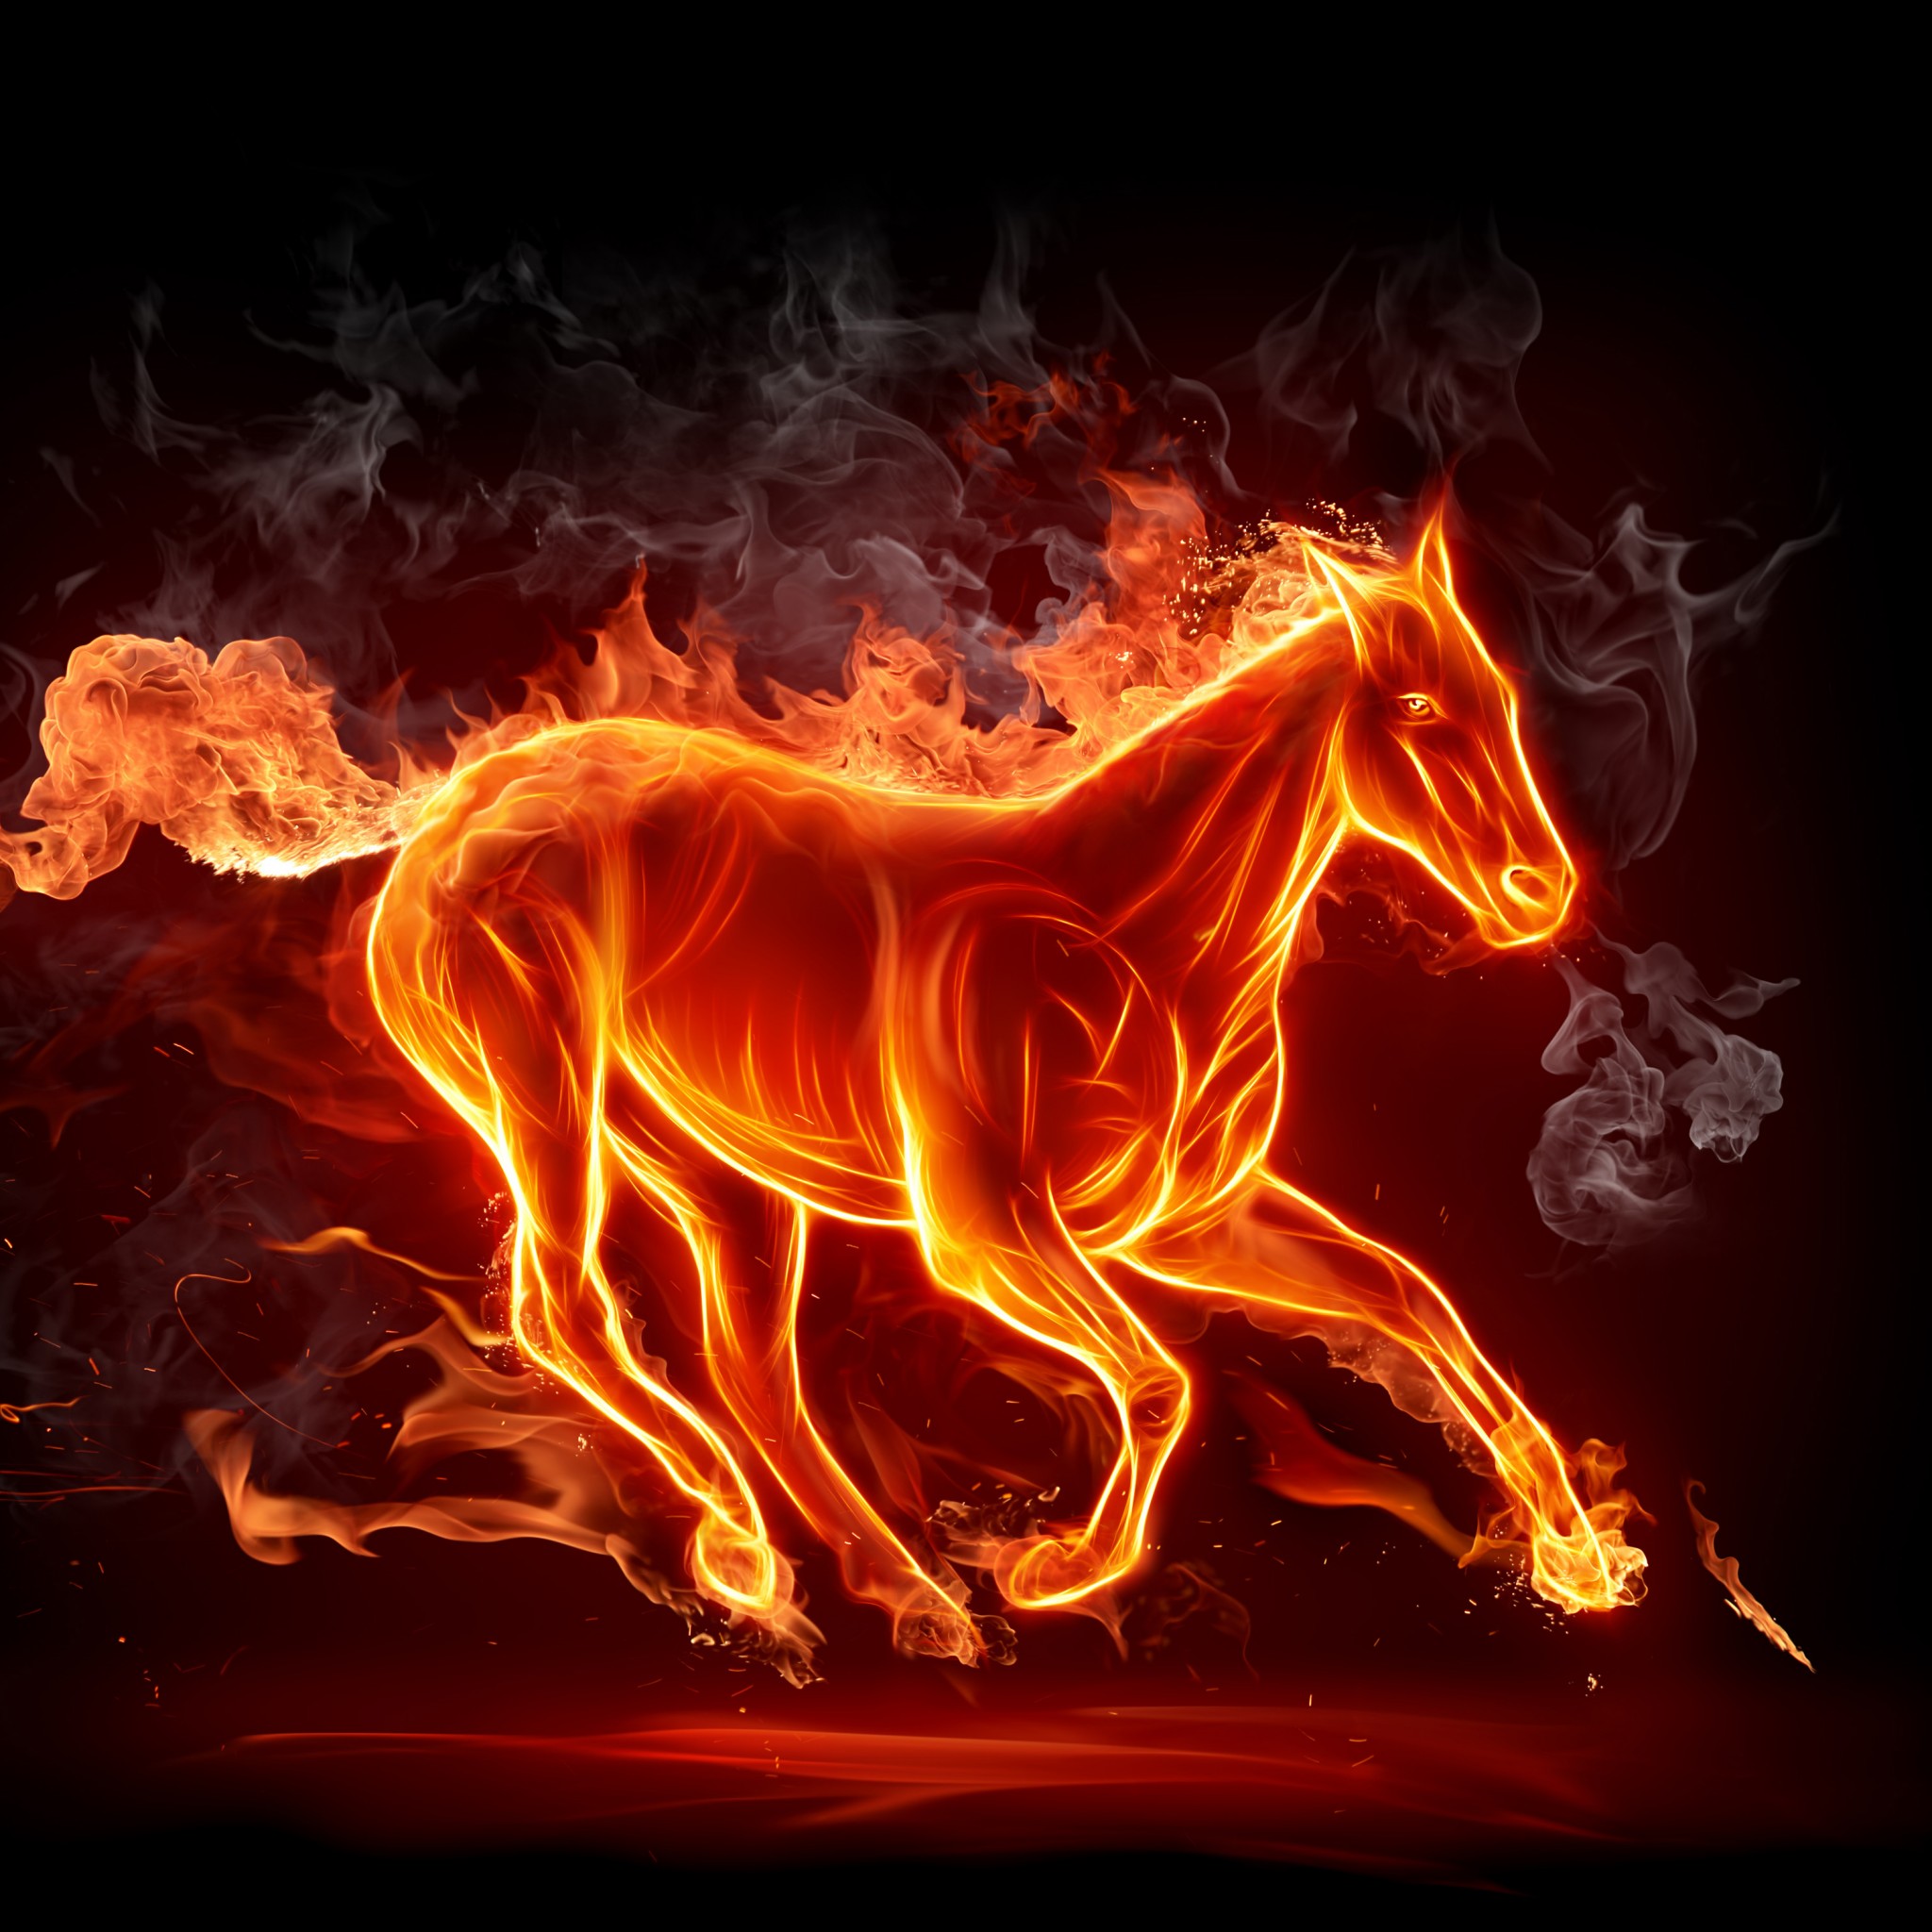 Digital Art Fire Horse 3d Desktop Hd Wallpaper Wallpapers And Backgrounds Ipad タブレット壁紙ギャラリー